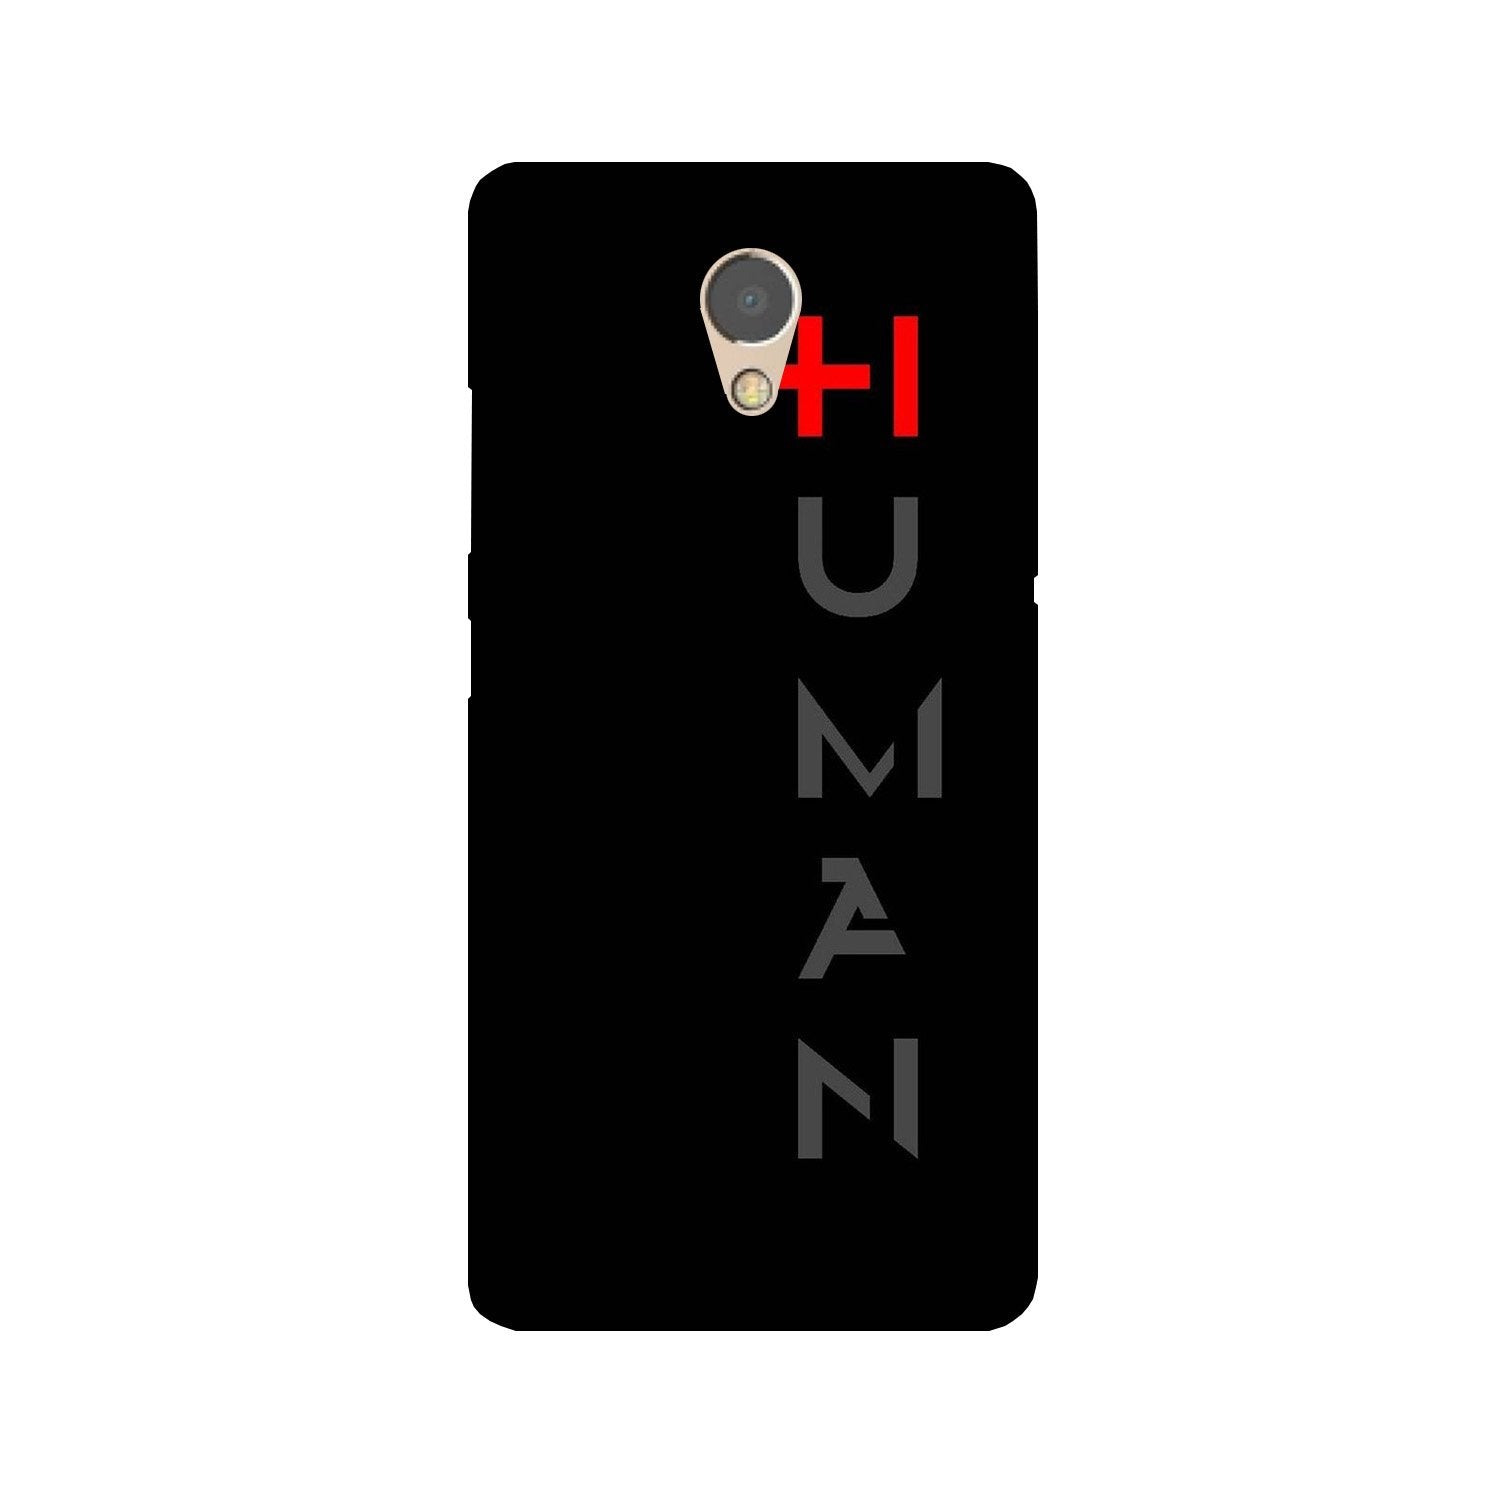 Human Case for Lenovo P2(Design - 141)